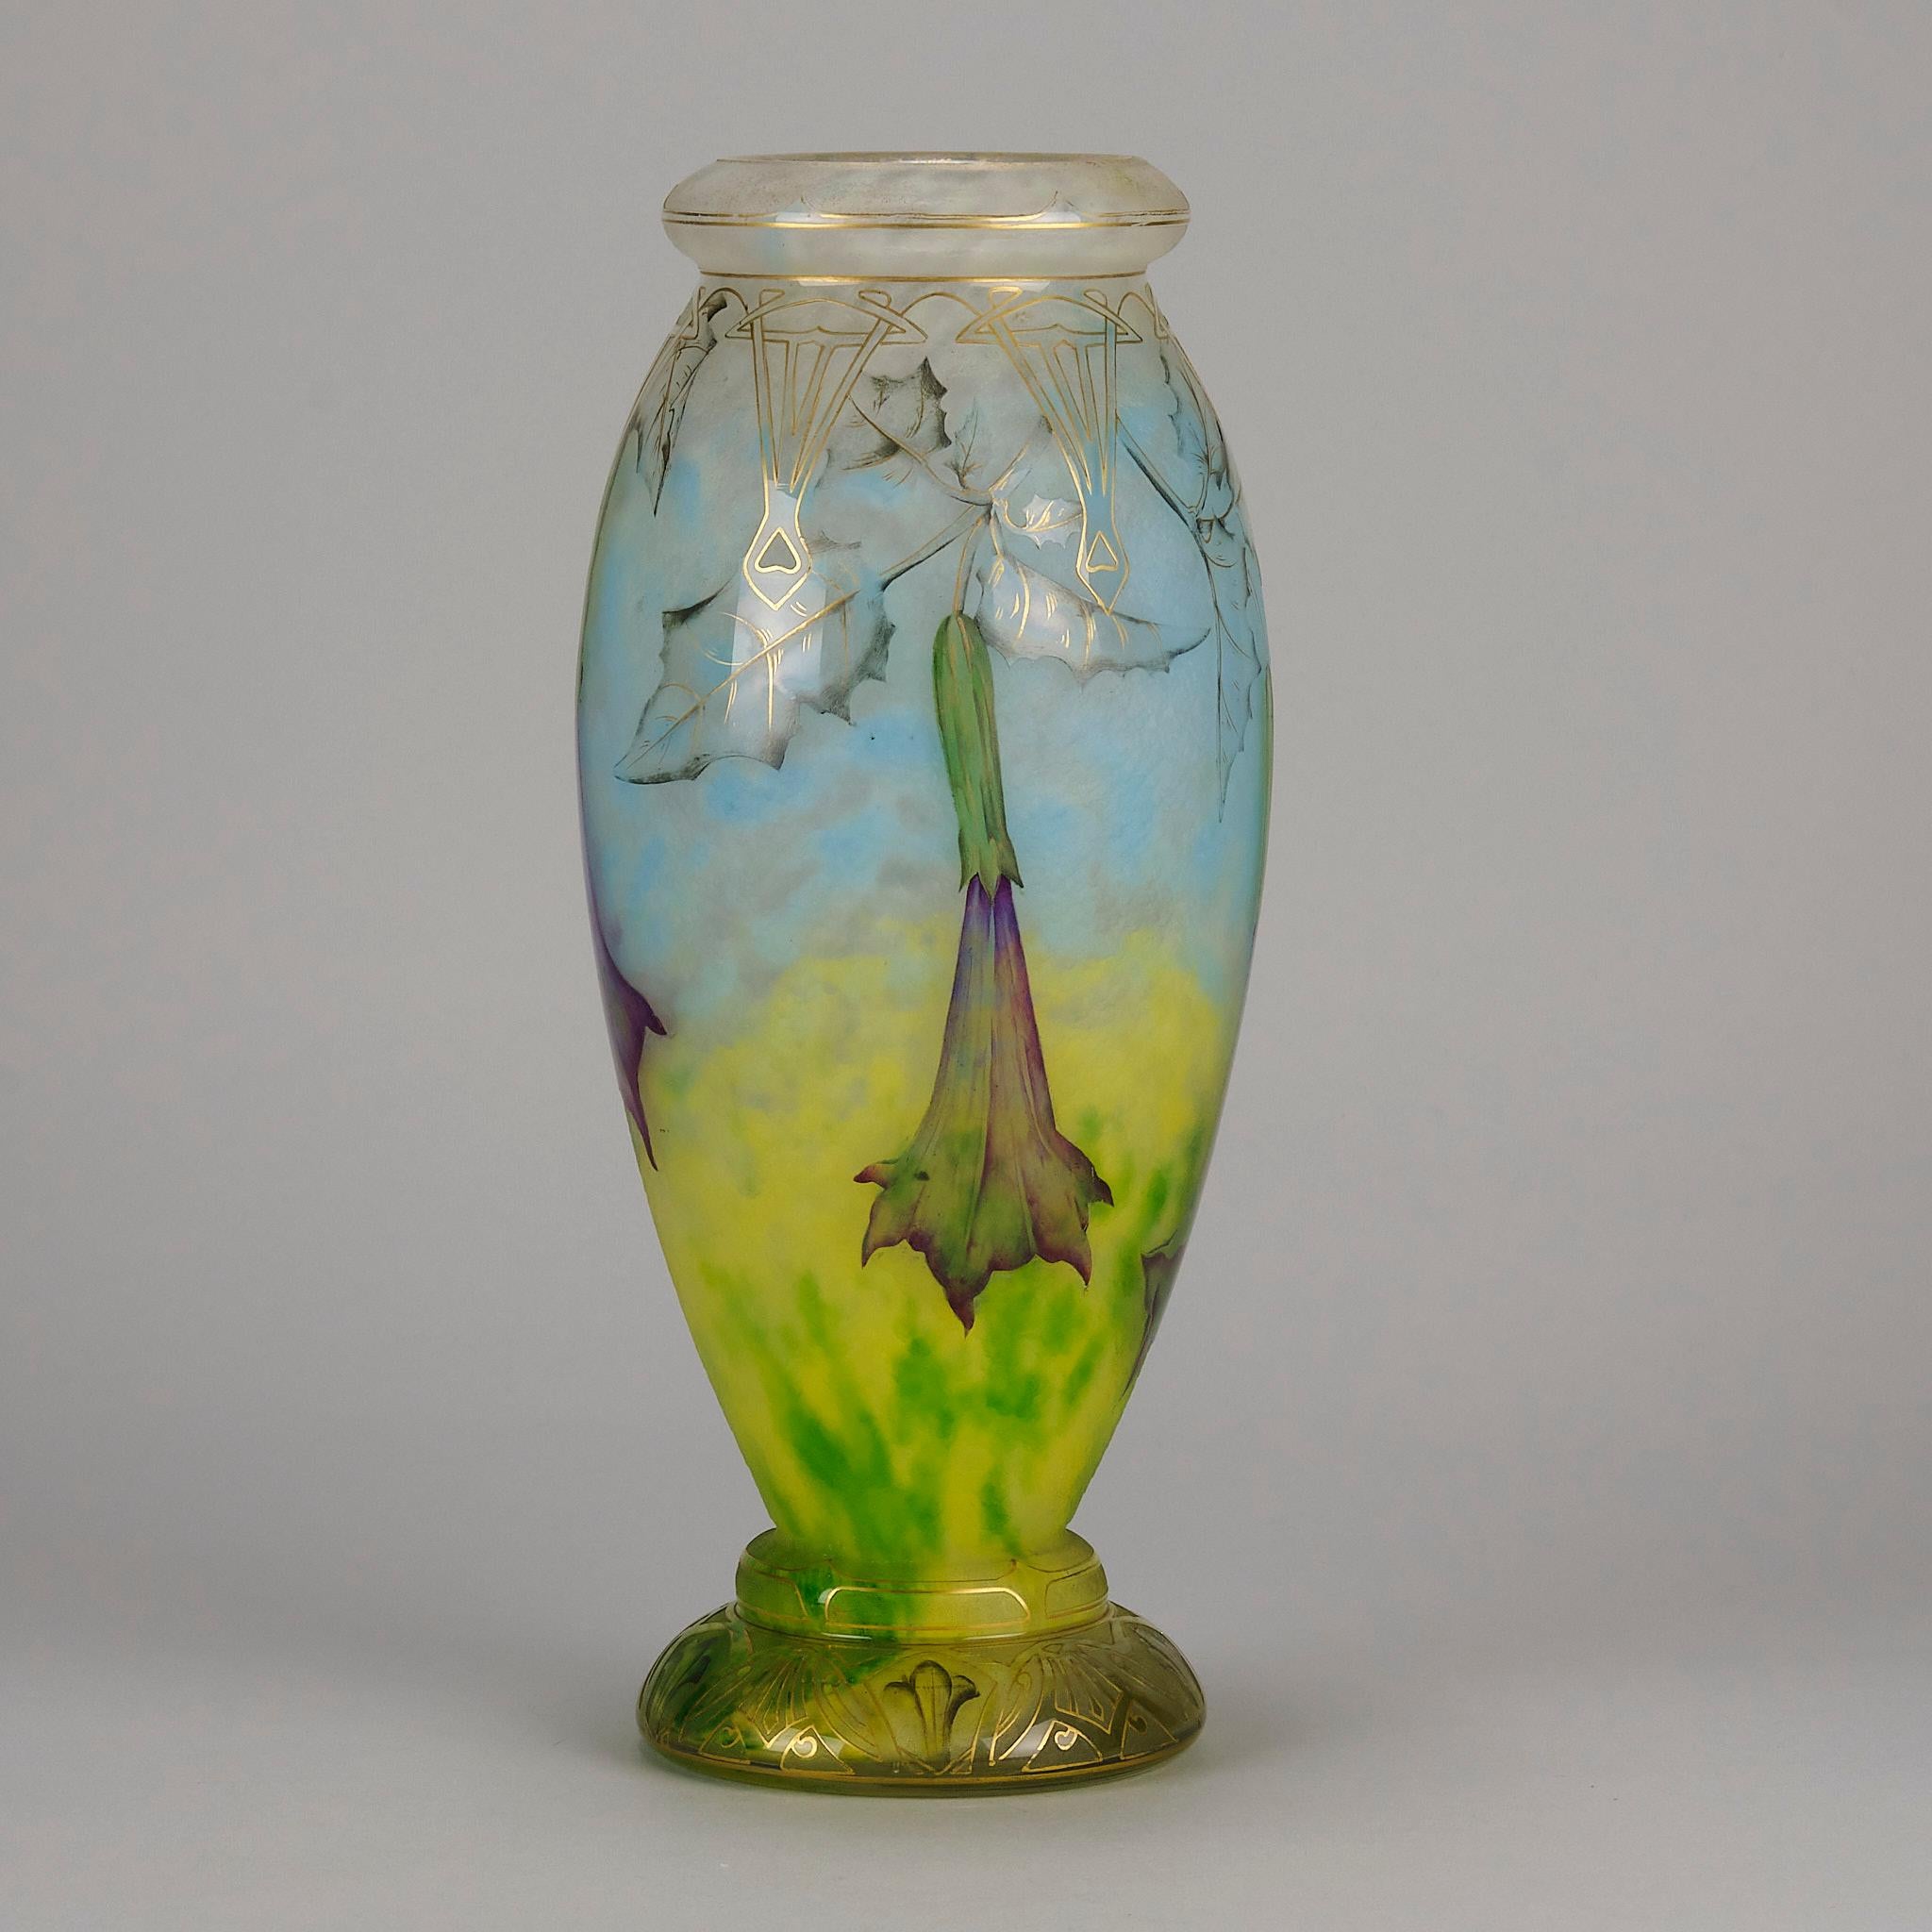 Molded Early 20th Century Art Nouveau Glass Vase entitled “Daturas Vase” by Daum Frères For Sale